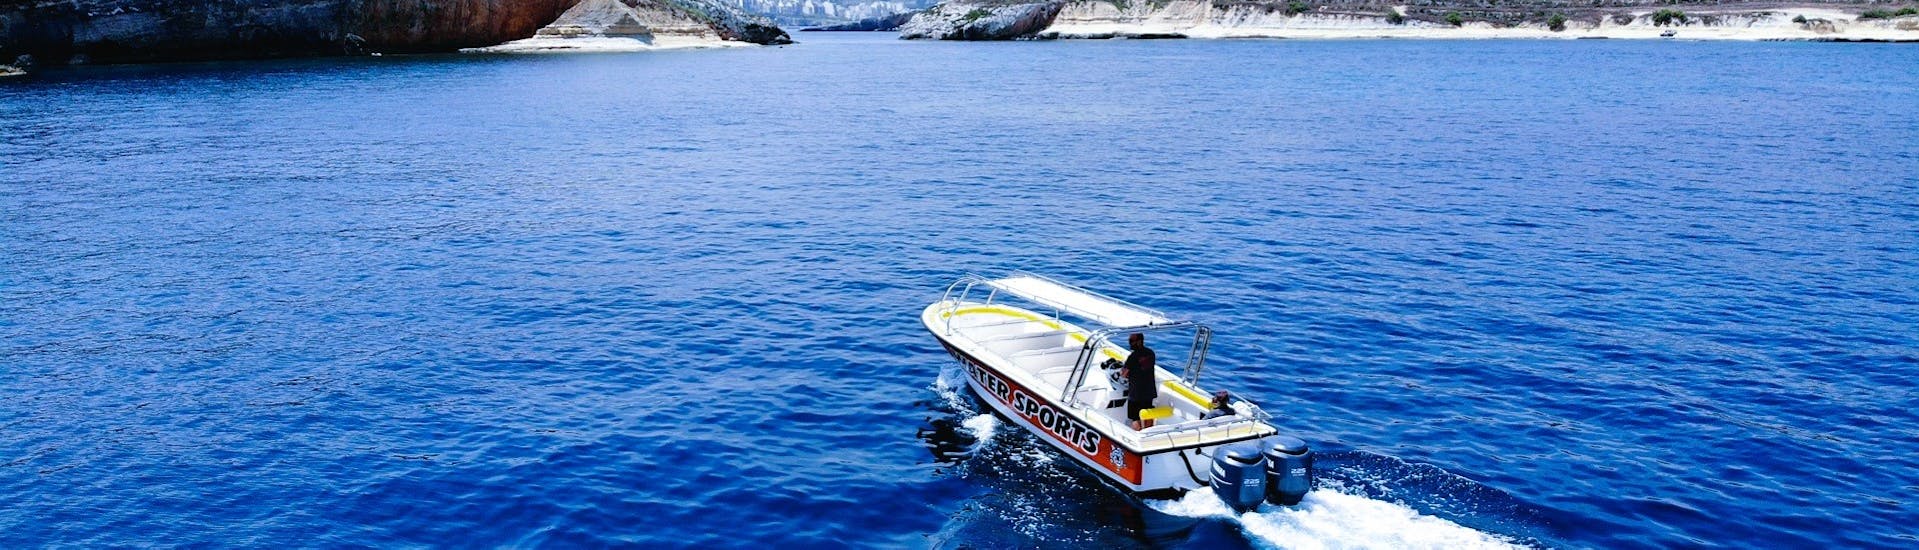 Balade en bateau - Comino avec Baignade & Visites touristiques avec Whyknot Cruises Malta.